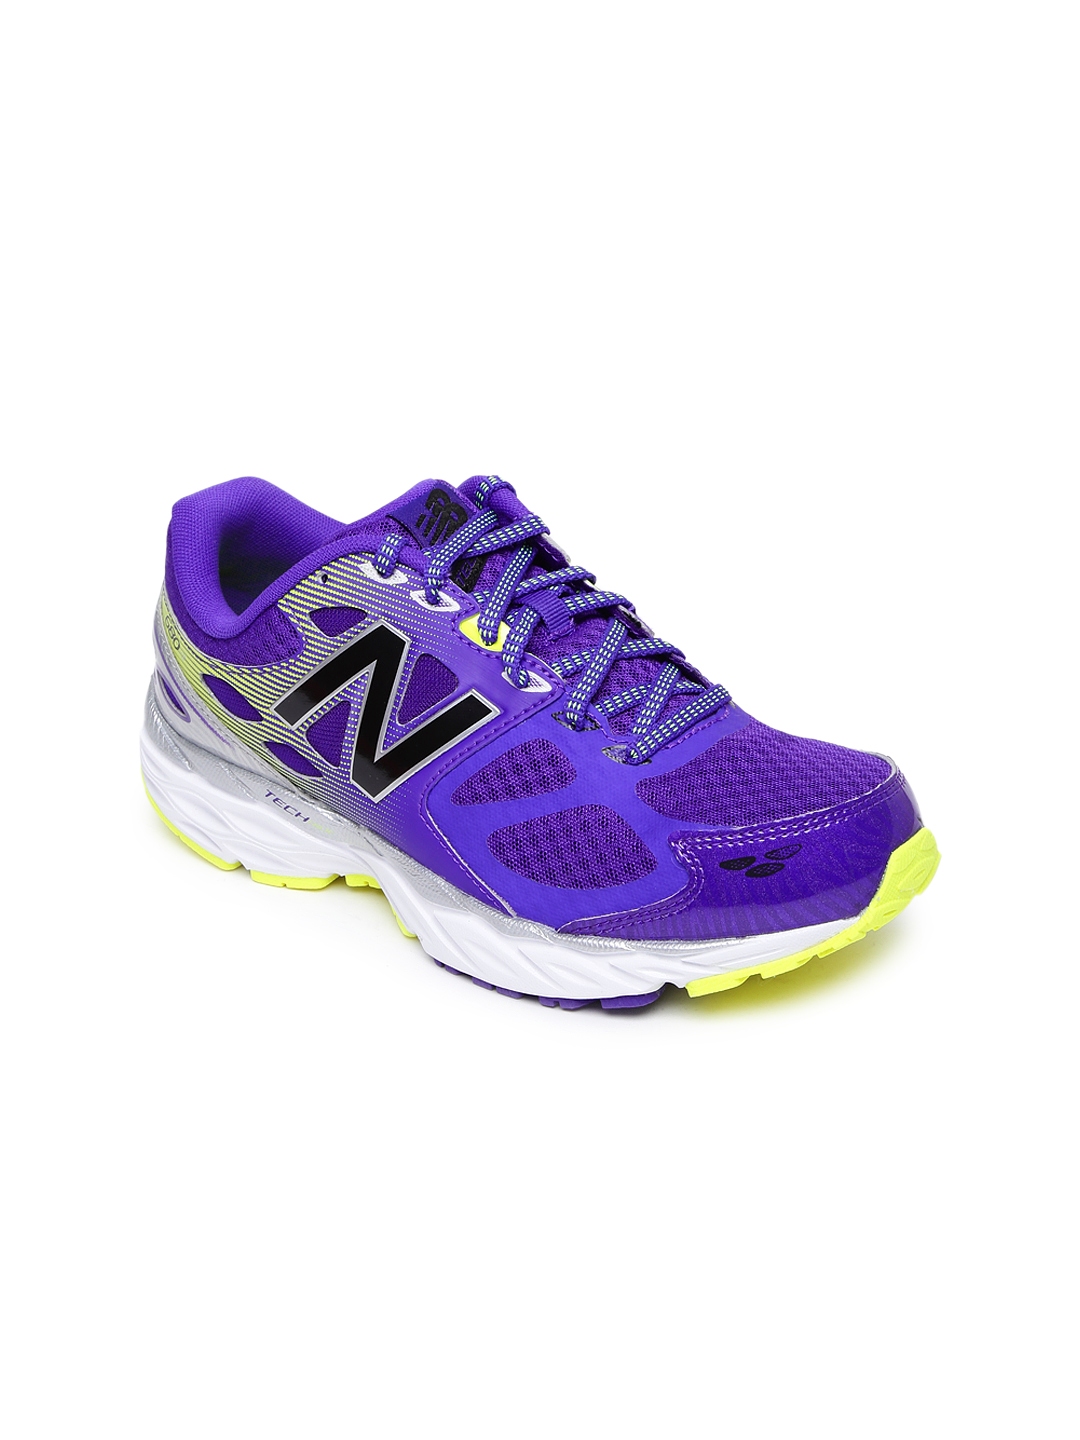 new balance womens purple shoes